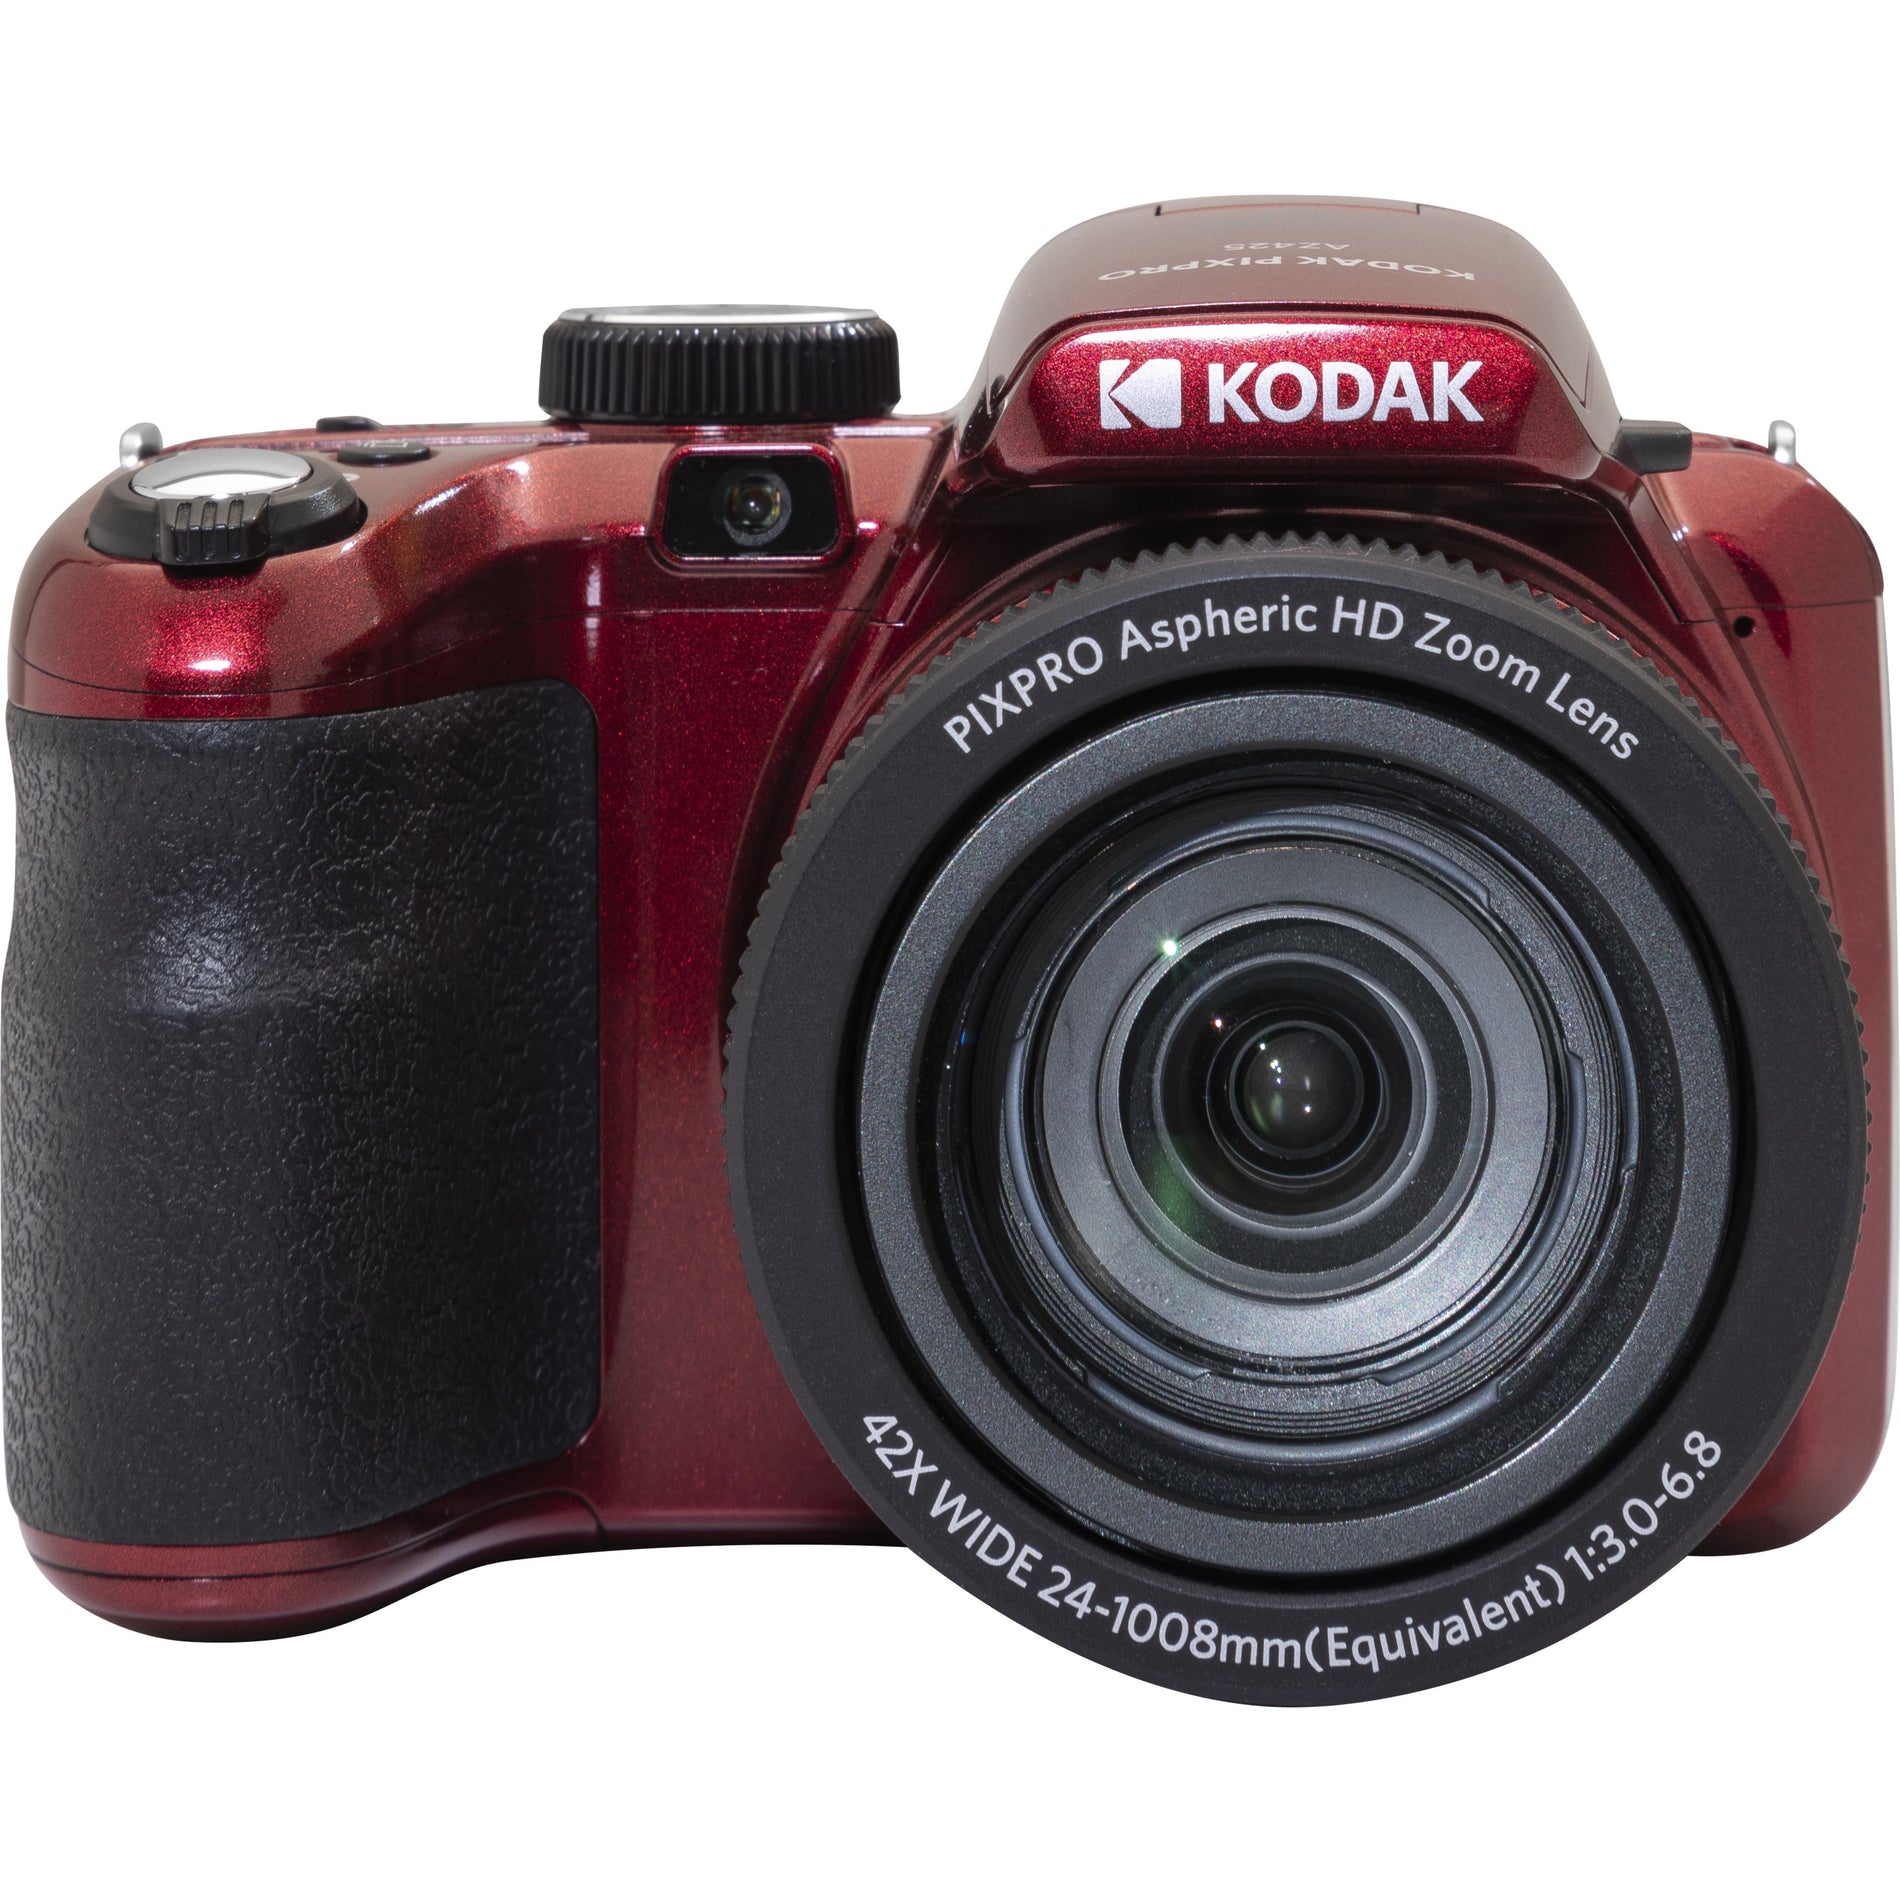 Kodak AZ425-RD PIXPRO Astro Zoom Bridge Camera, 20.7MP, 42x Optical Zoom, Full HD Video